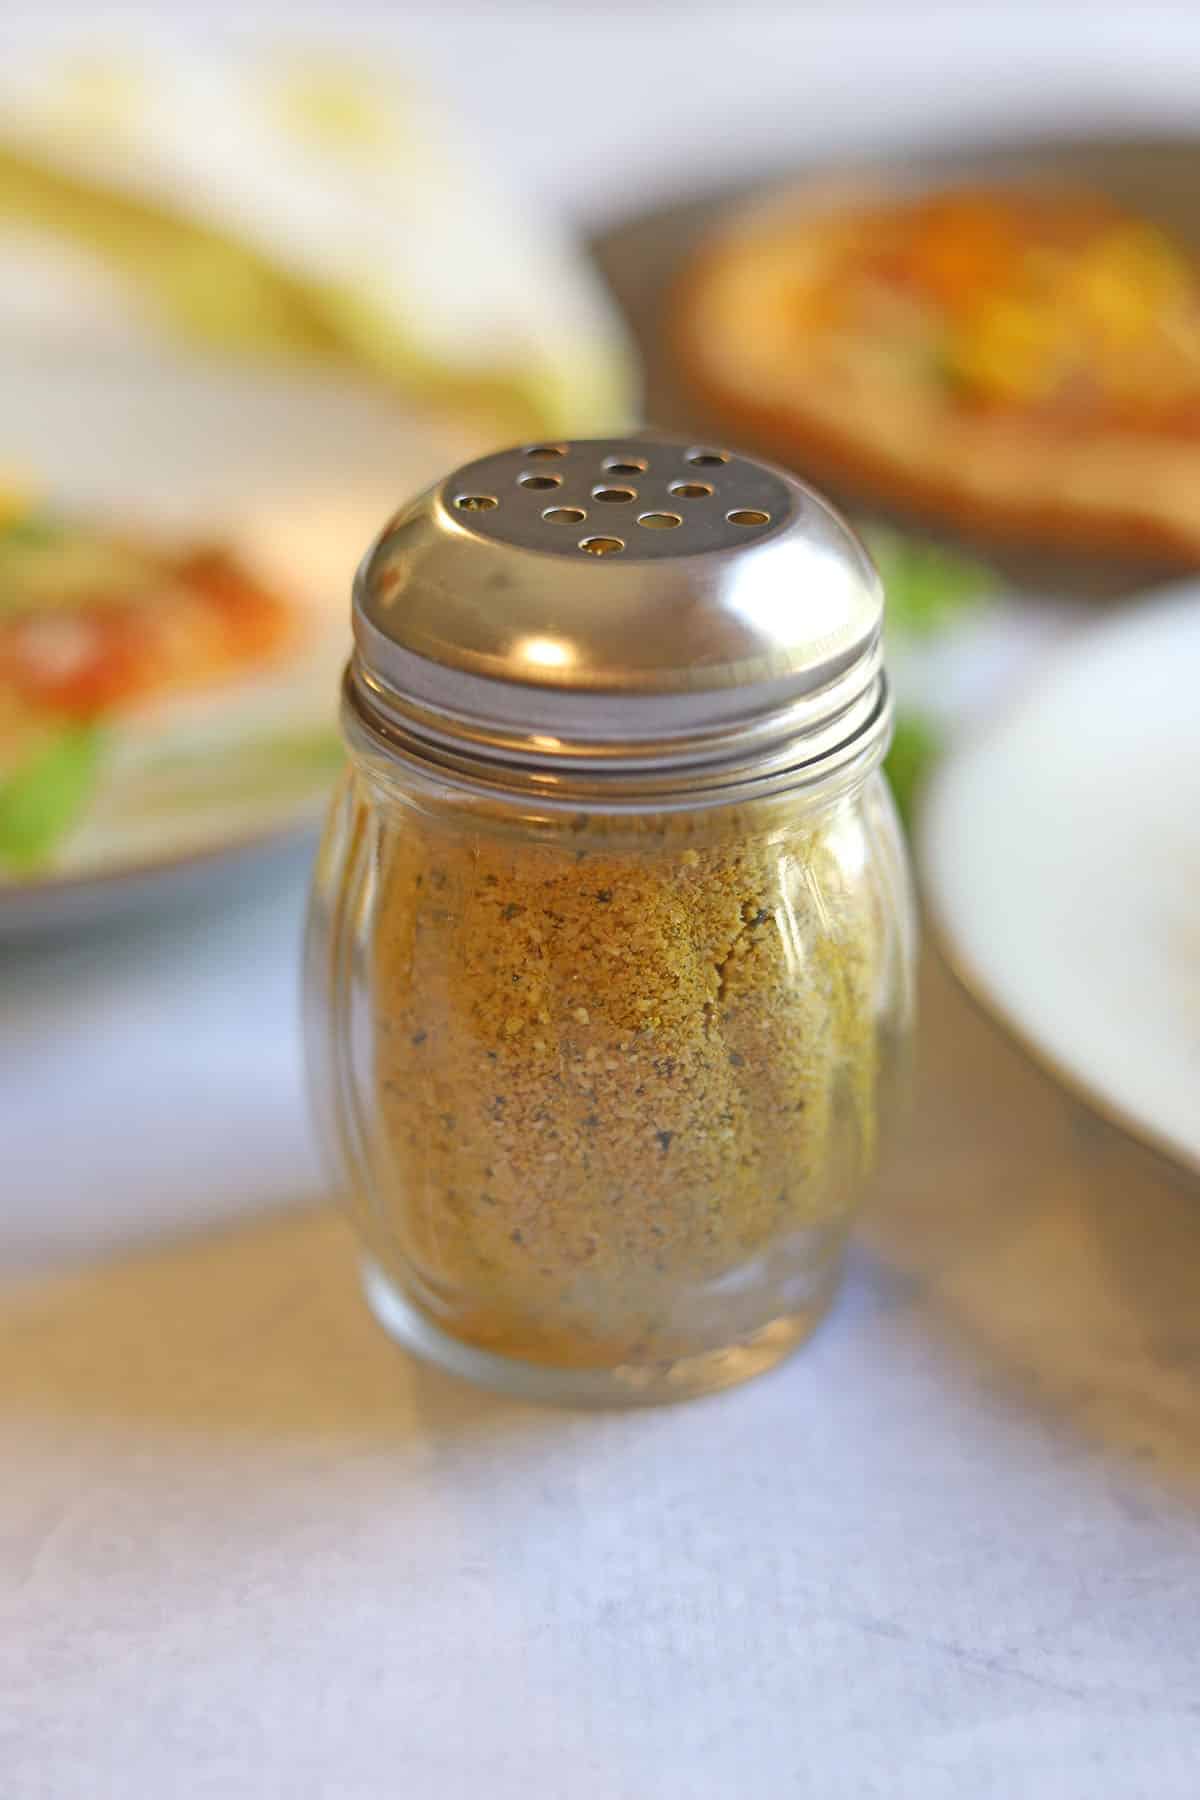 Cashew parmesan in shaker jar on table.